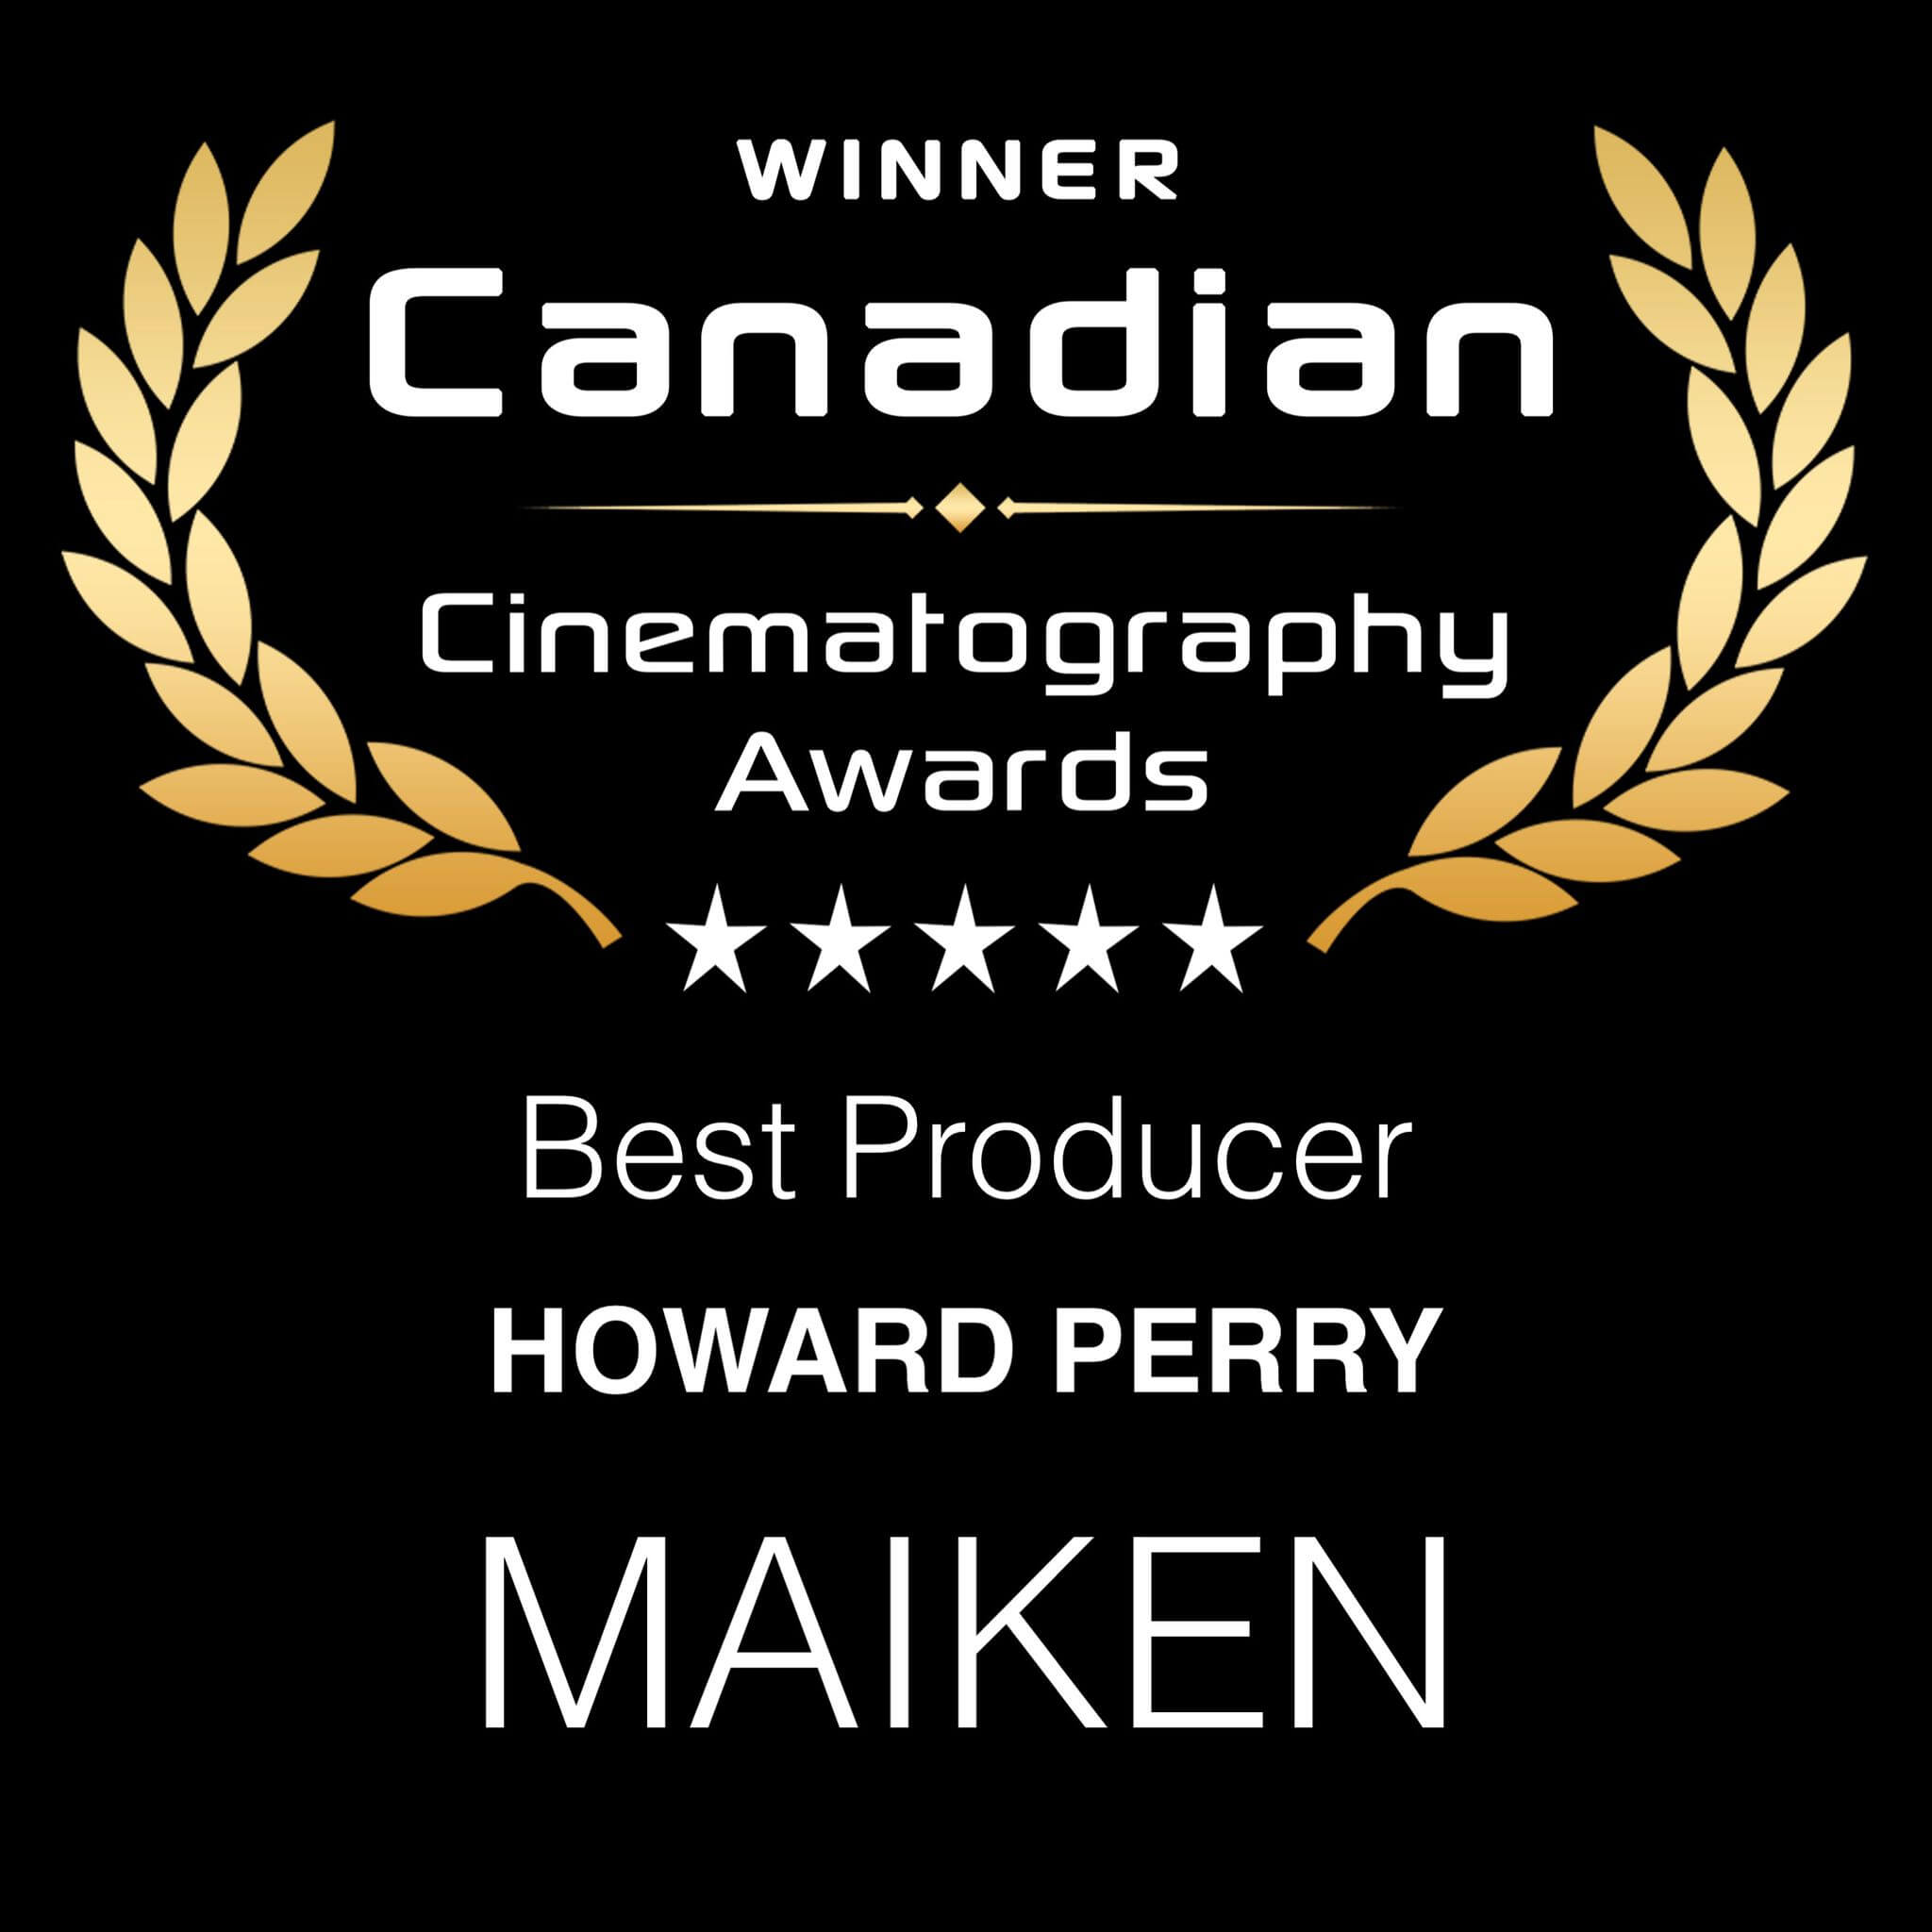 Canadian cinematography best producer award